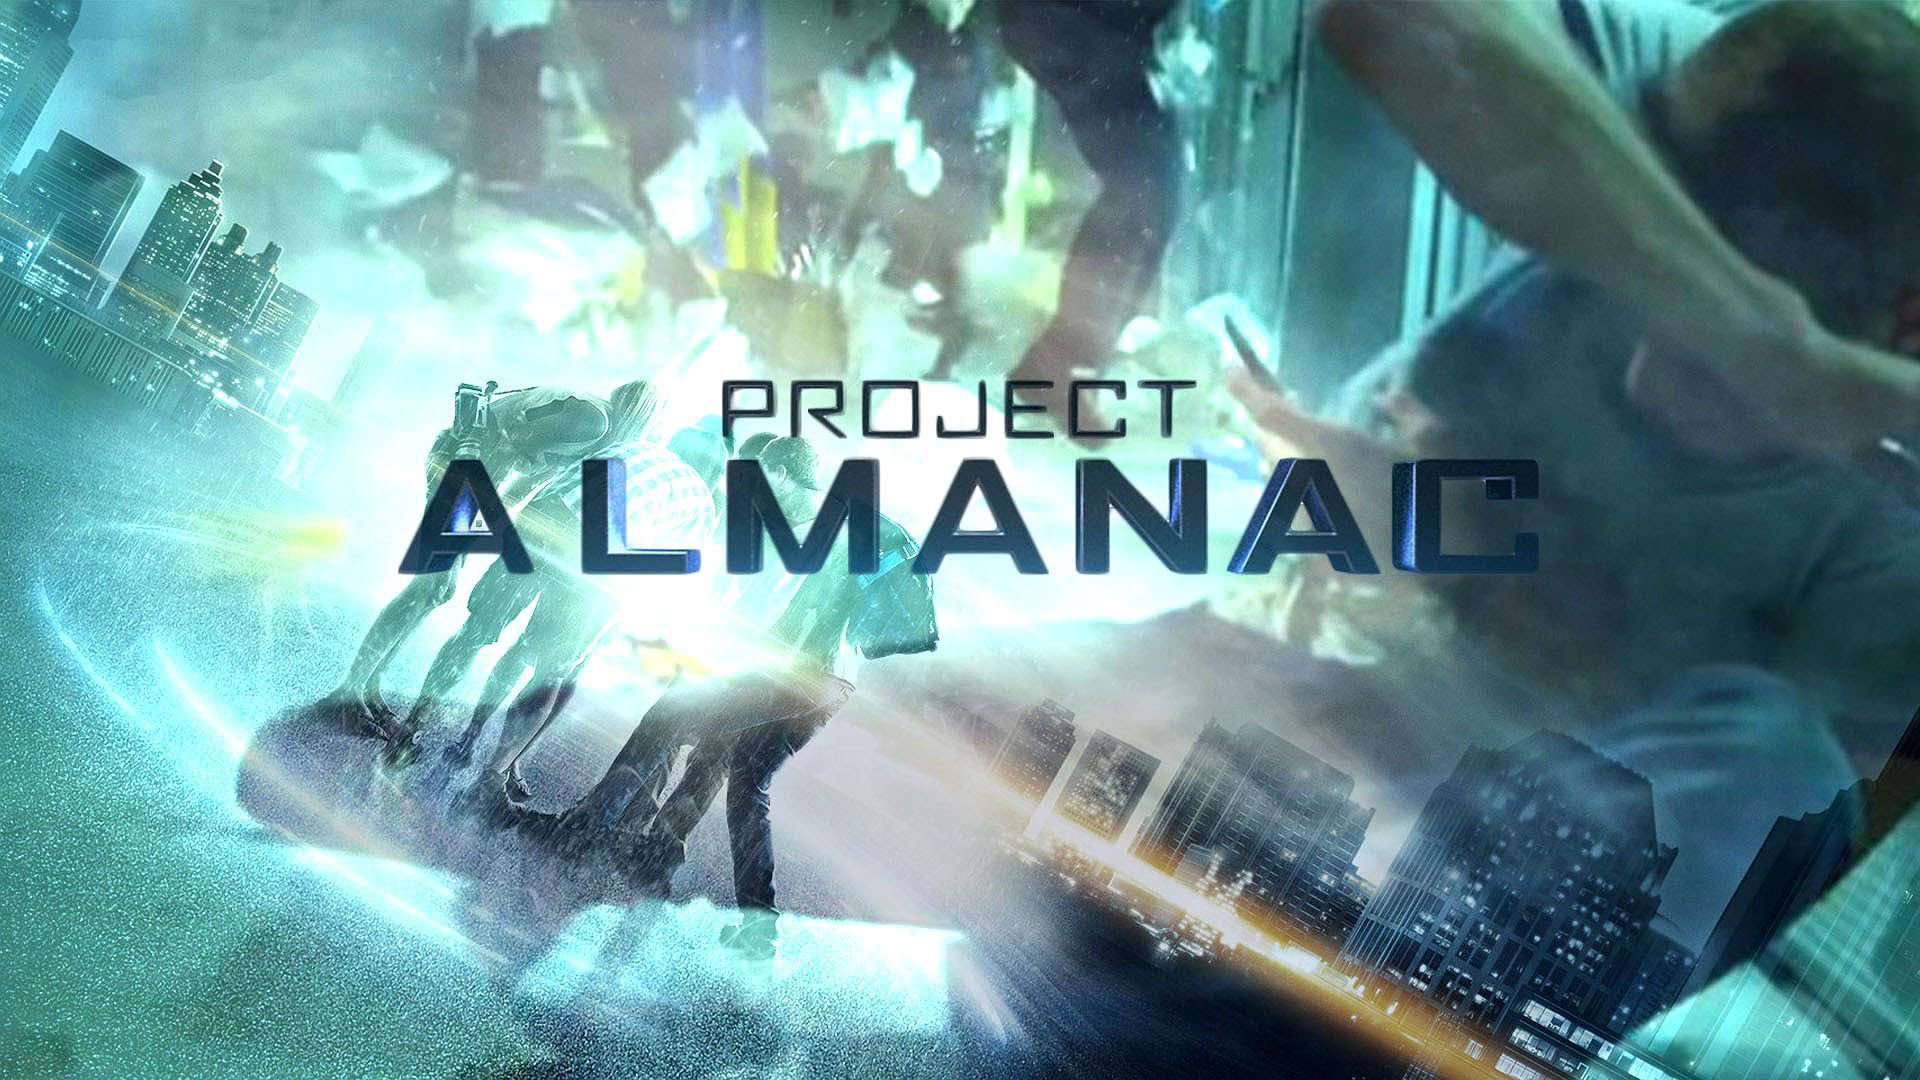 project, Almanac, Sci fi, Thriller, Adventure, Futuristic, Technics, Science, 1almanac, Poster Wallpaper